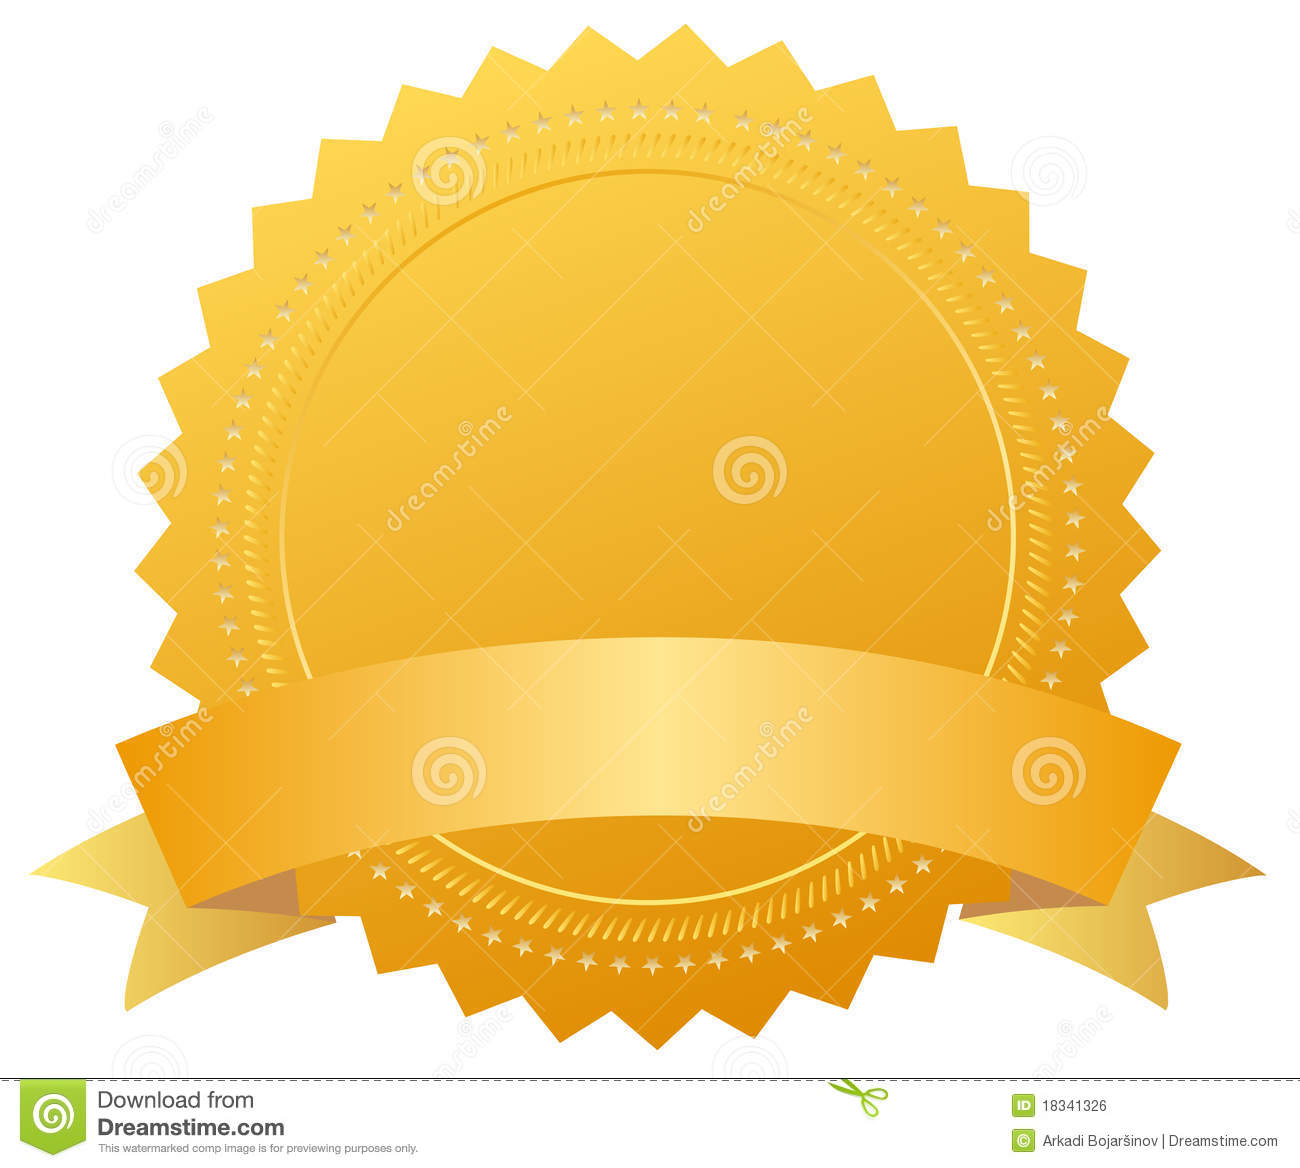 Blank Award Golden Medal Royalty Free Stock Image   Image  18341326